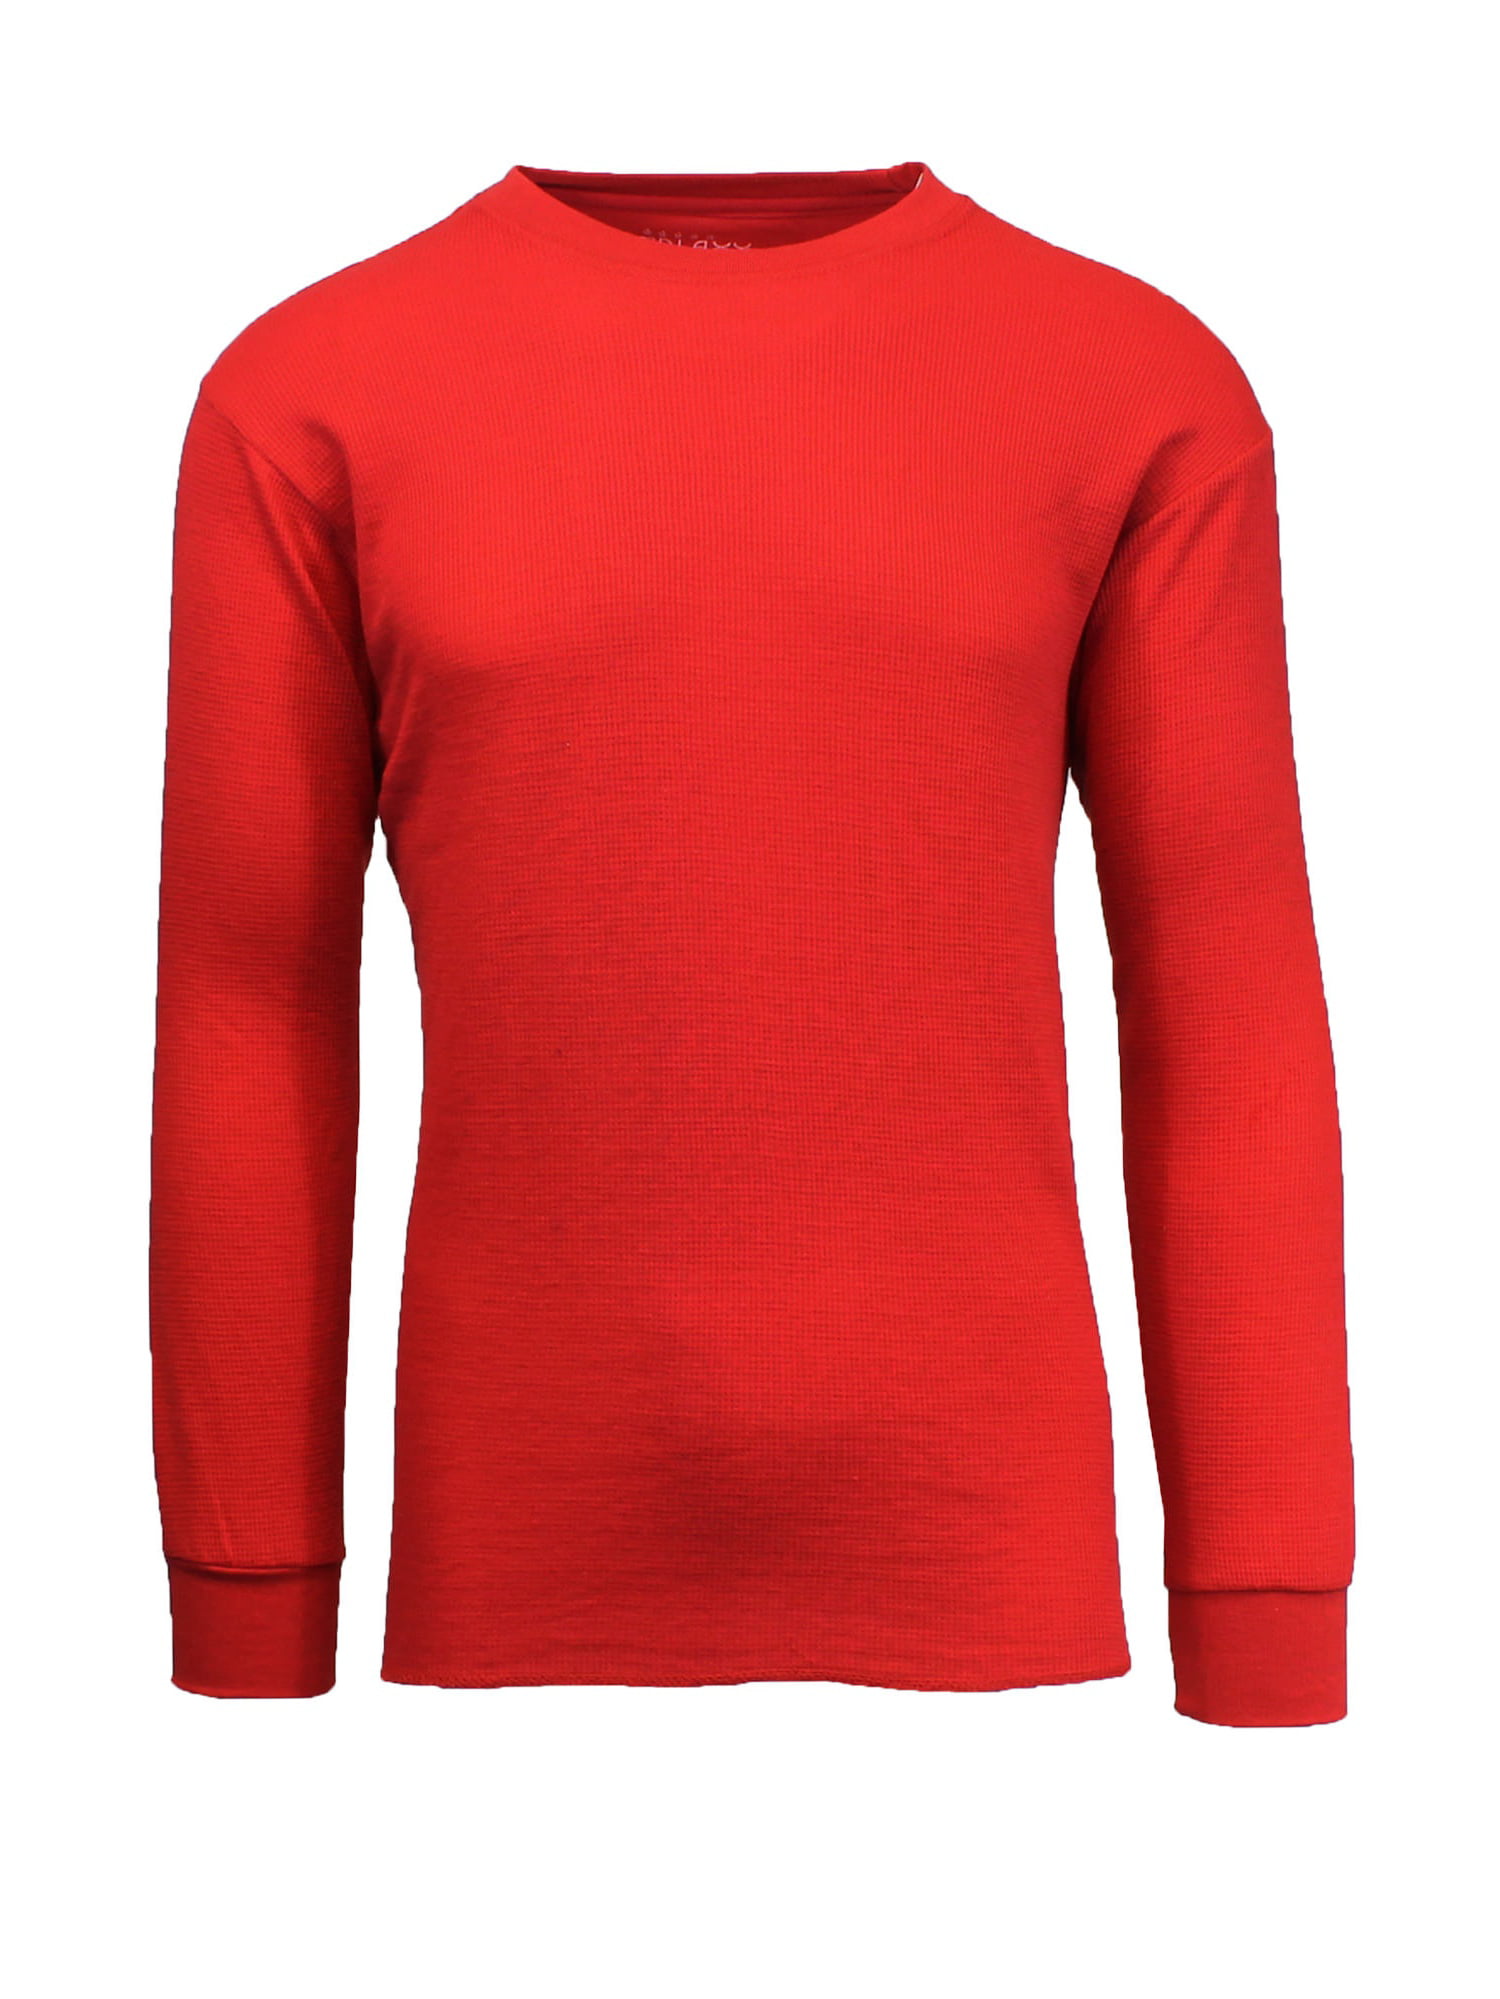 Men's Long Sleeve Crew Neck Thermal Shirts Warm Layer - Walmart.com